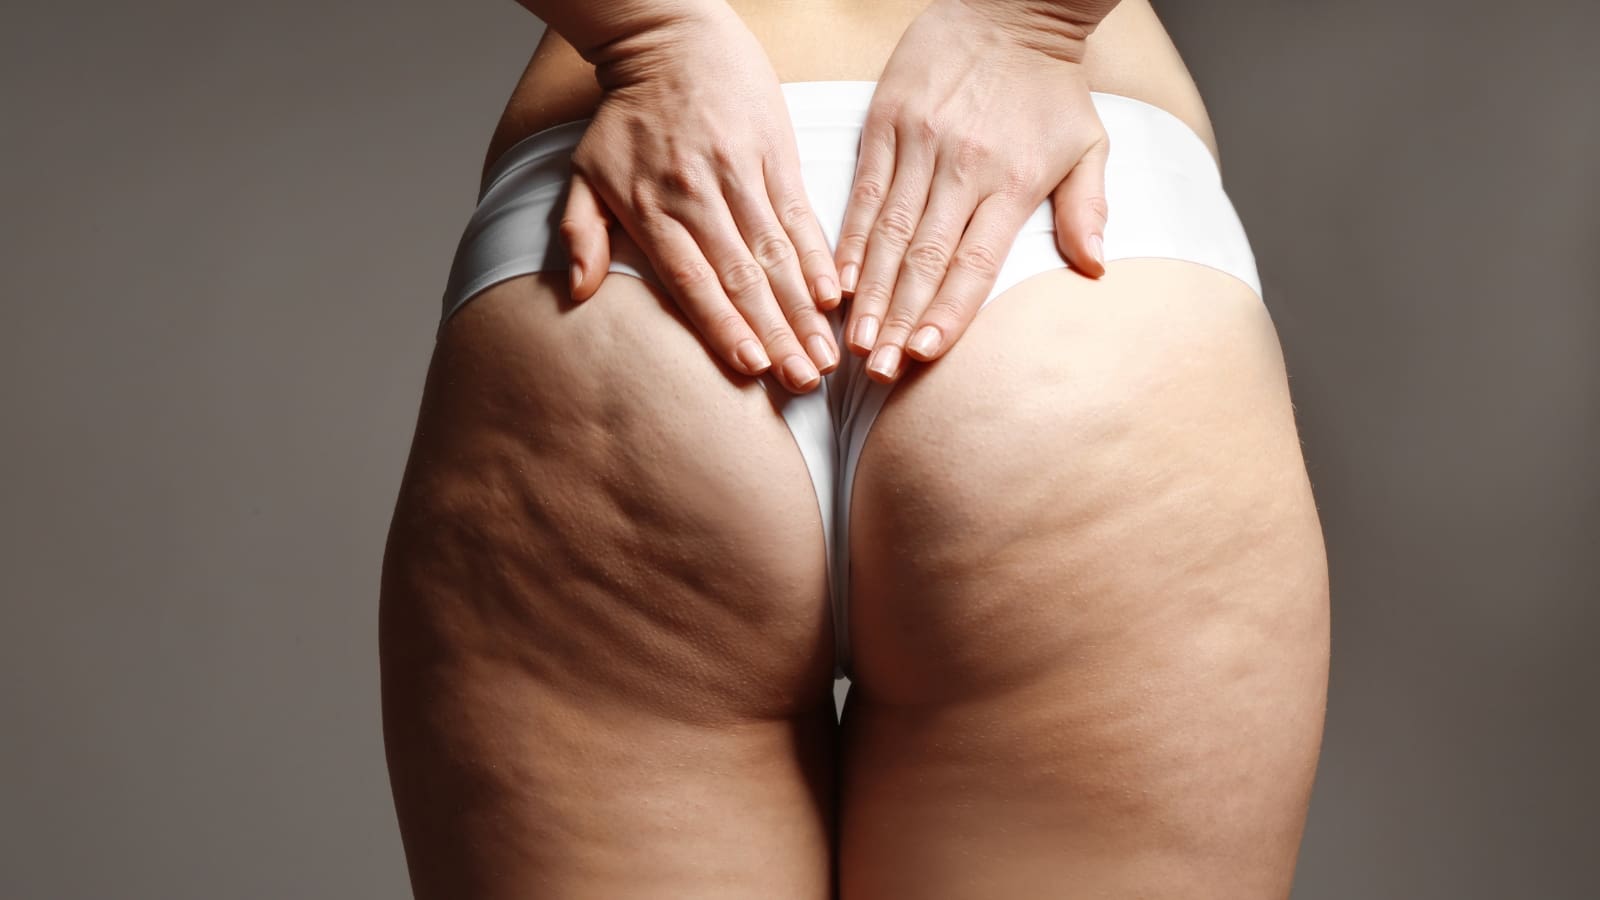 Cellulite on buttocks